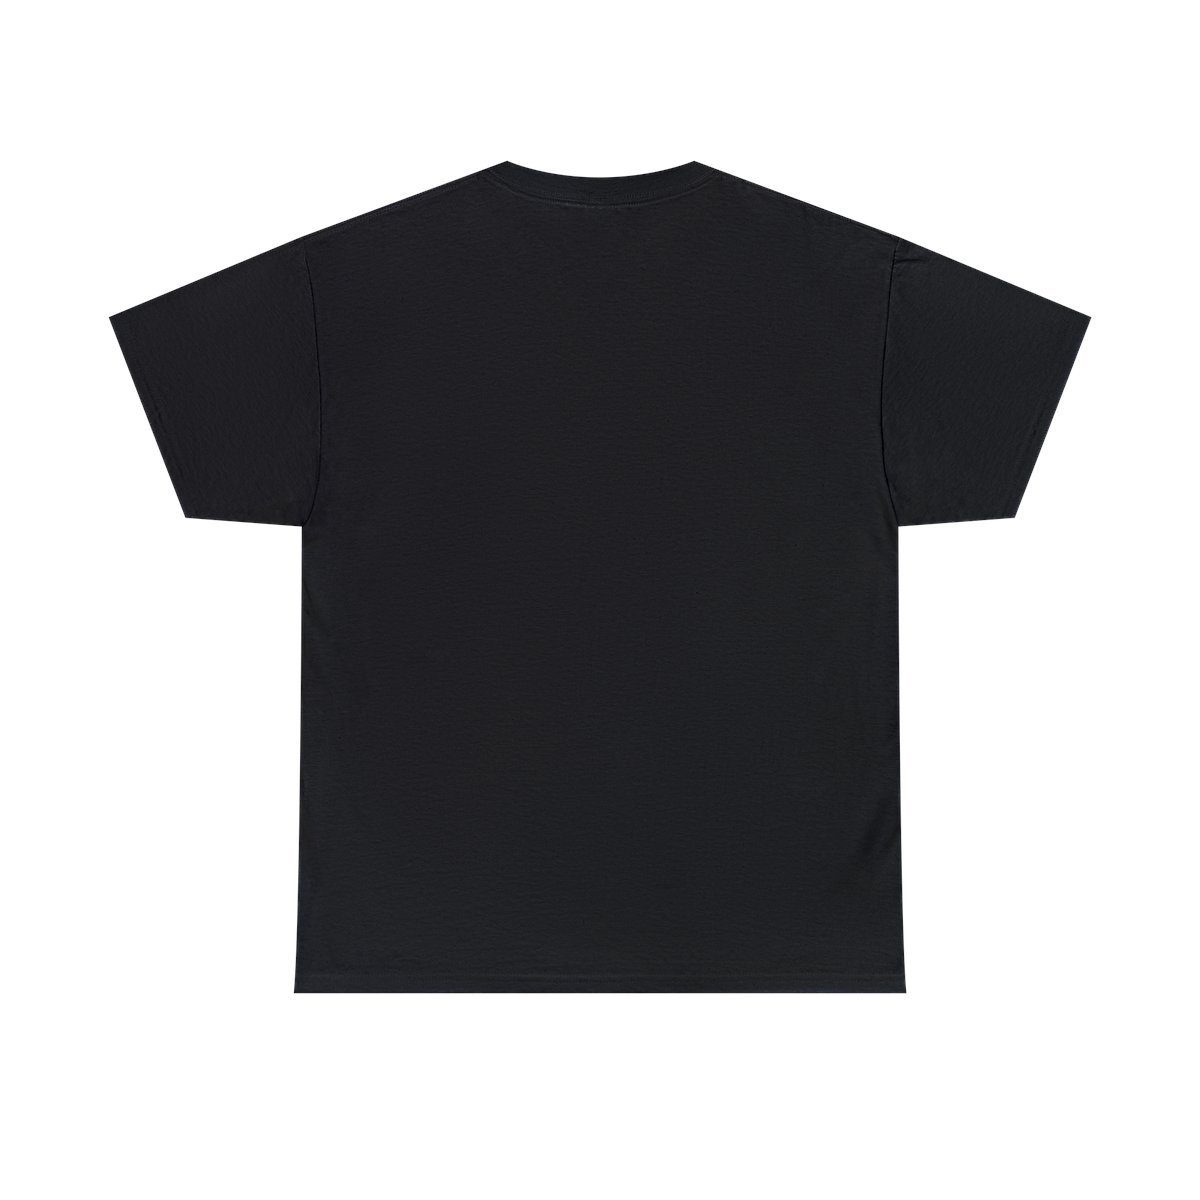 XIII Minutes – Exodo Fest Short Sleeve T-Shirt